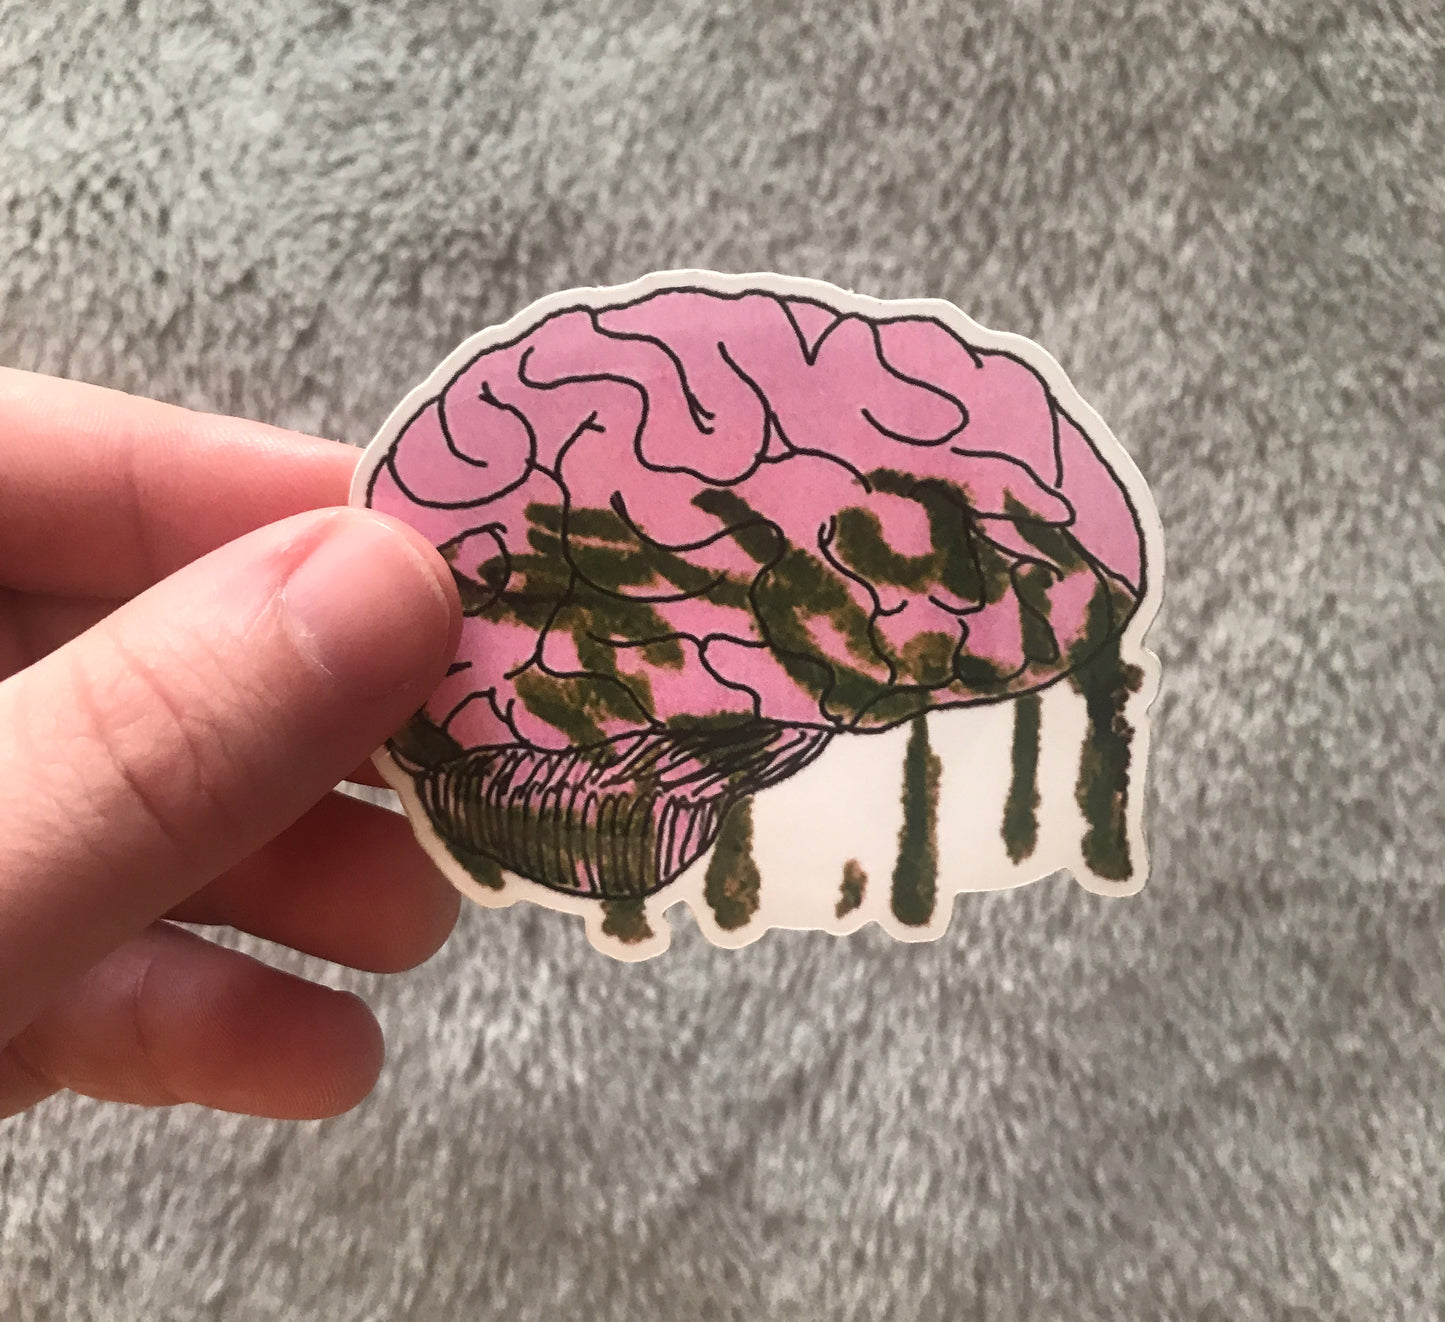 Oozing Brain Sticker